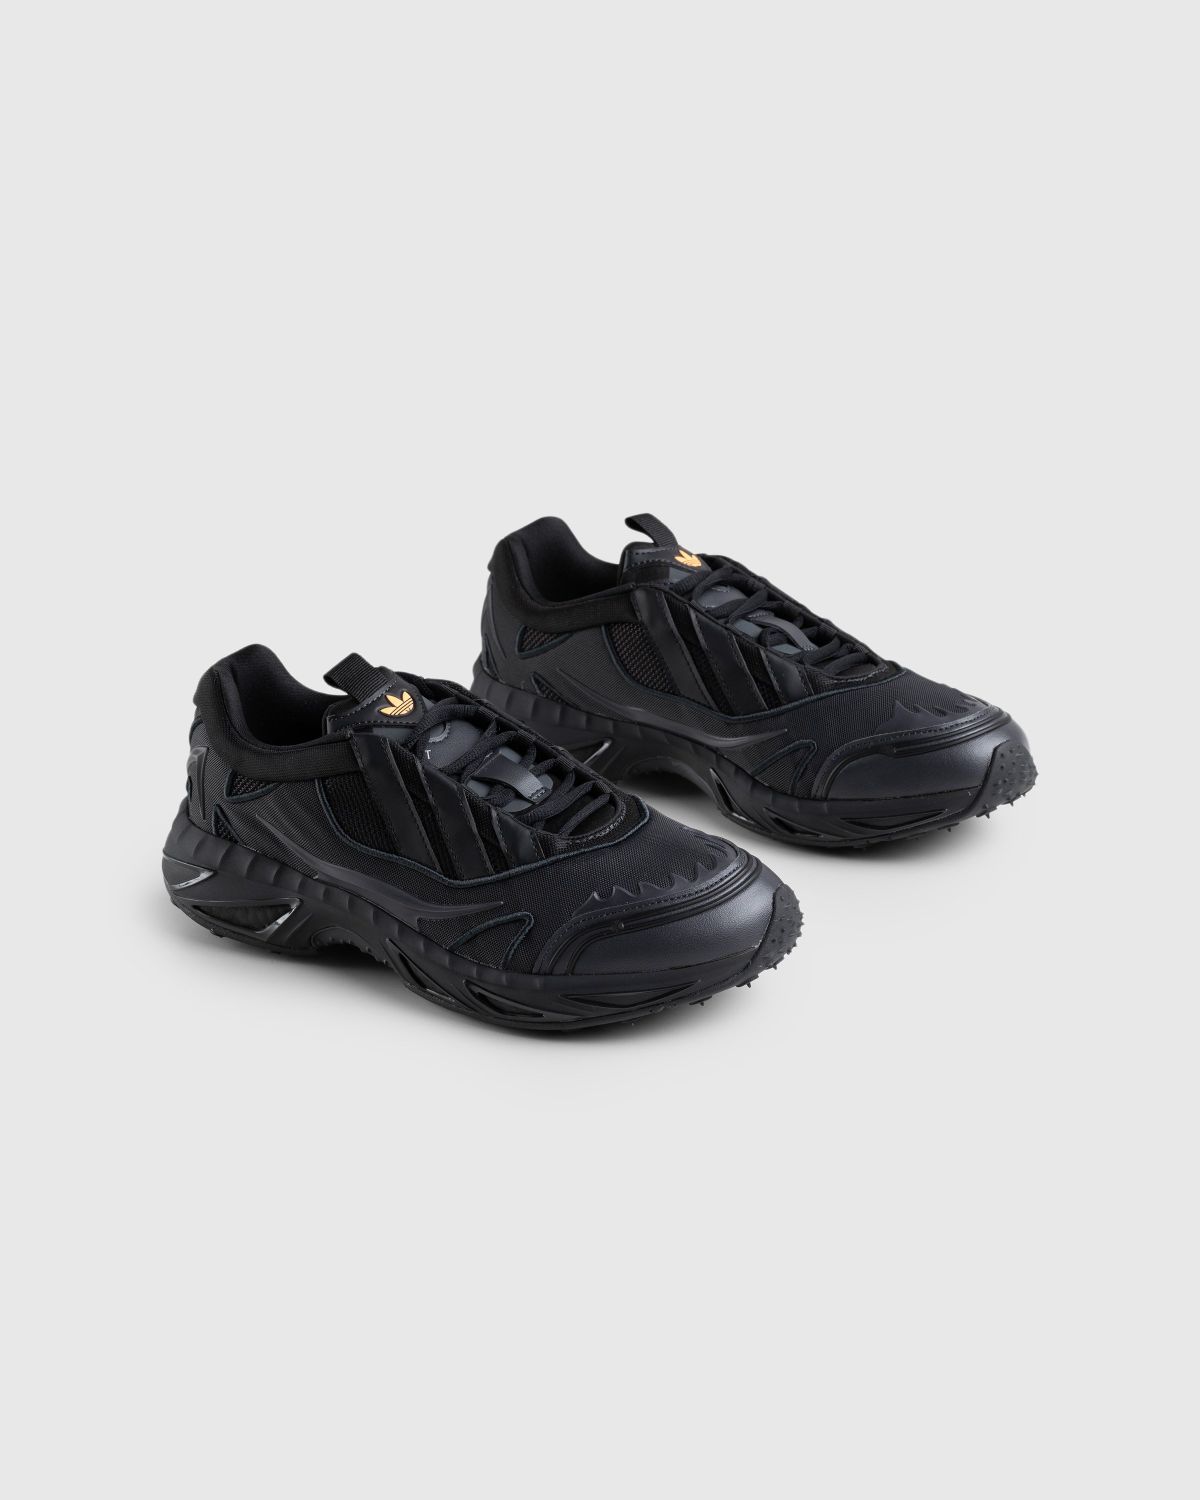 Adidas – Xare Boost Black - Low Top Sneakers - Black - Image 2